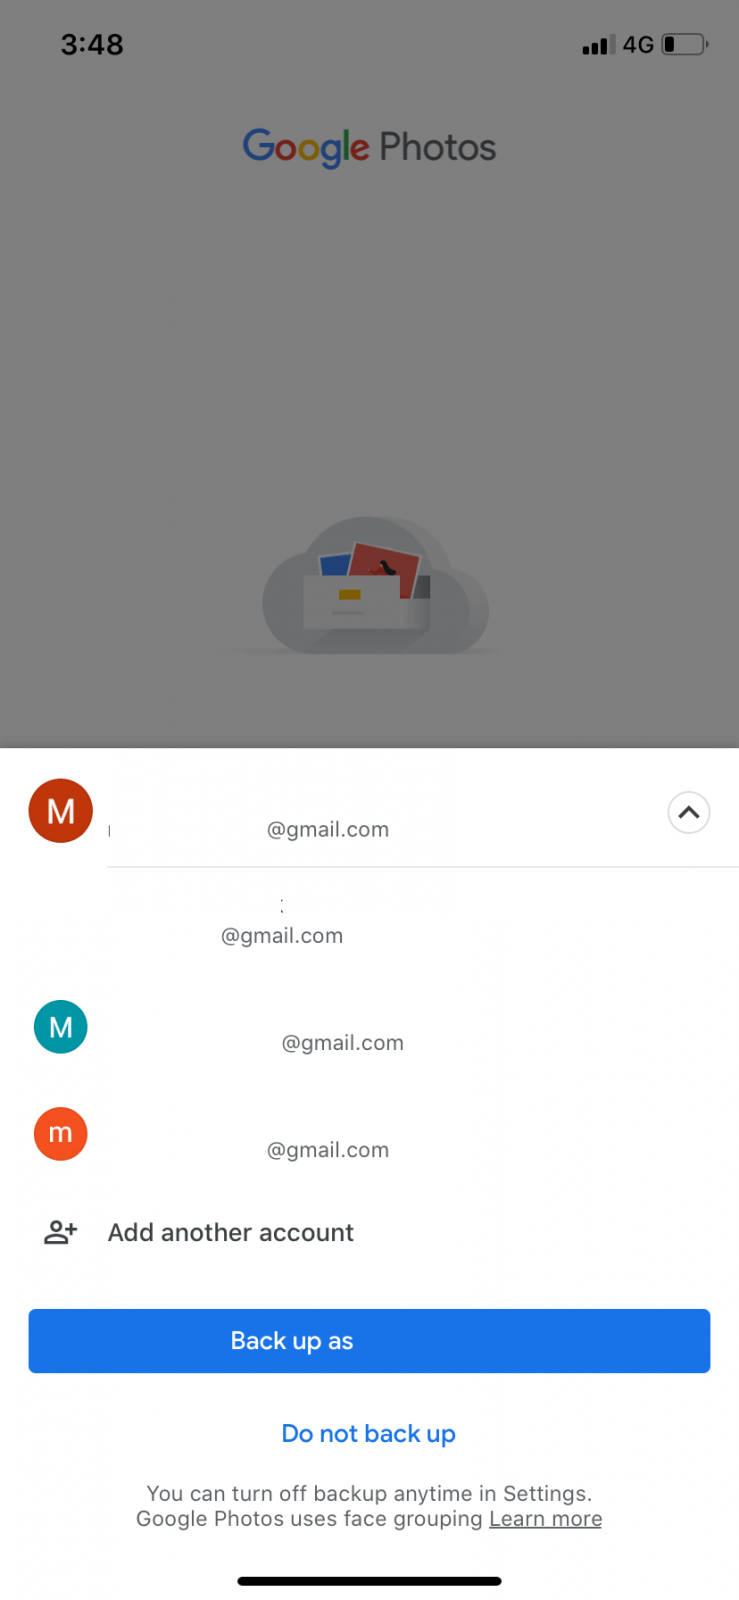 حساب Gmail